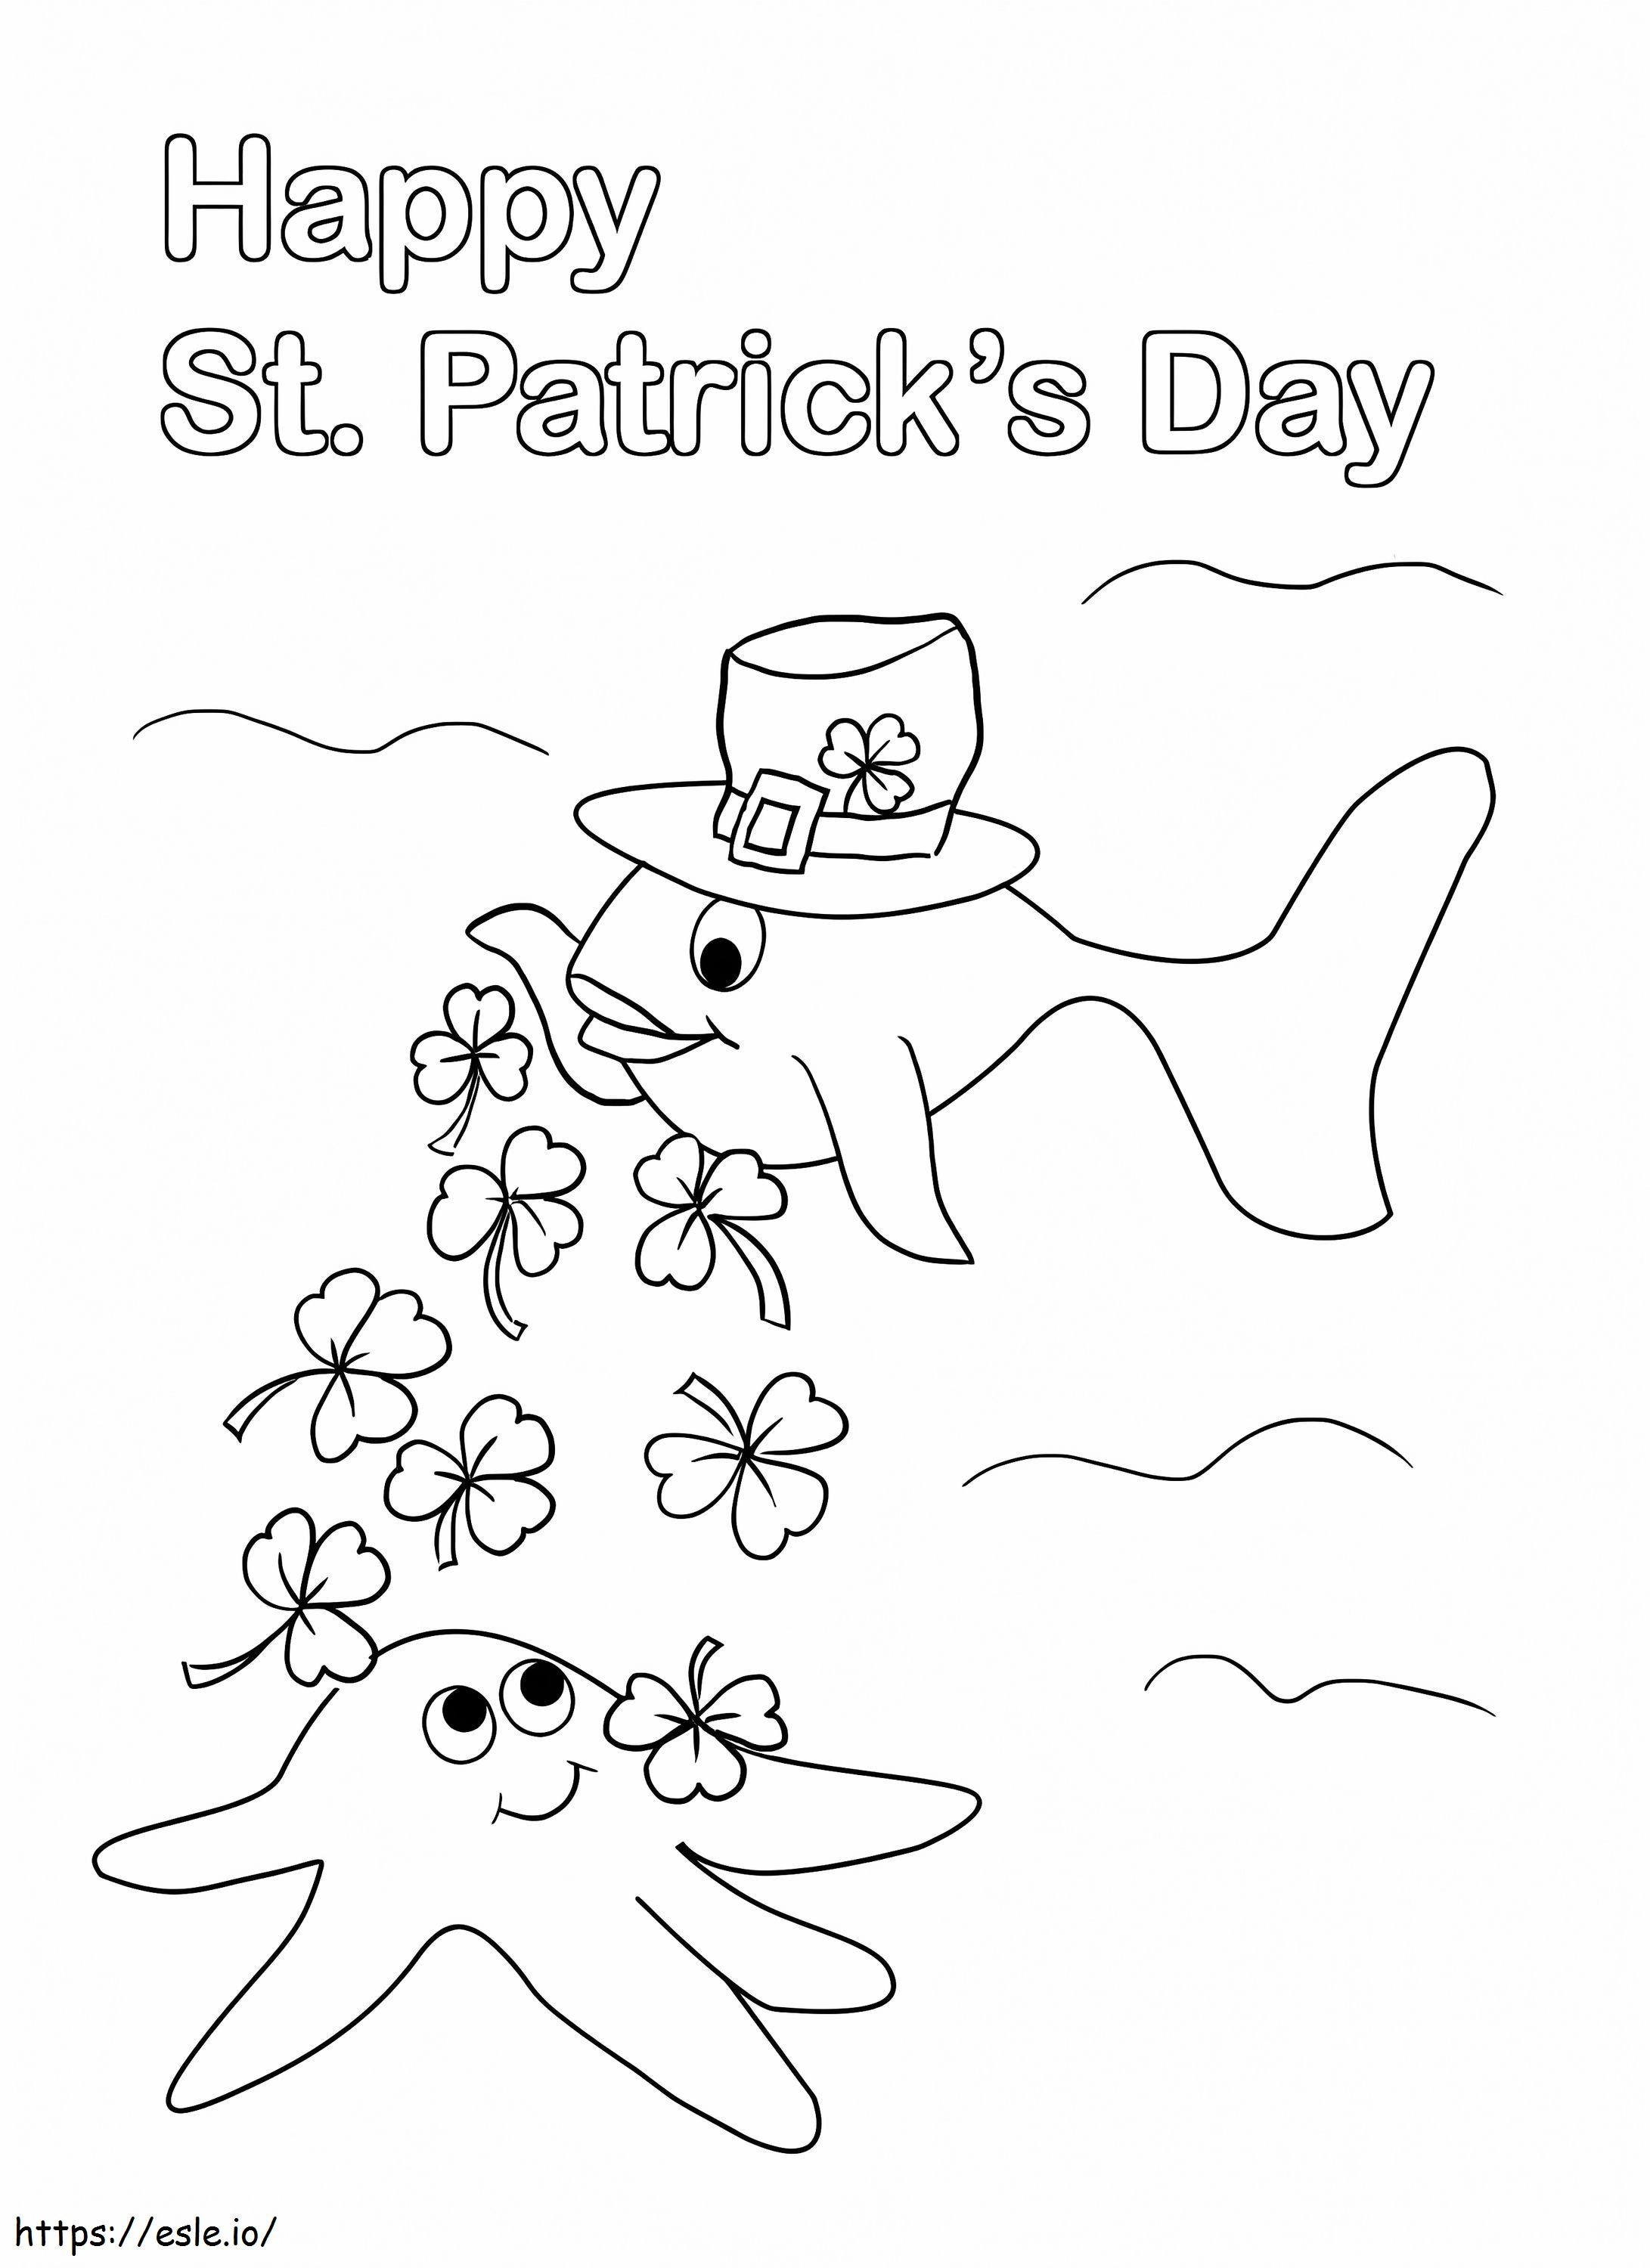 Hyvää St. Patricks Day -väriä värityskuva